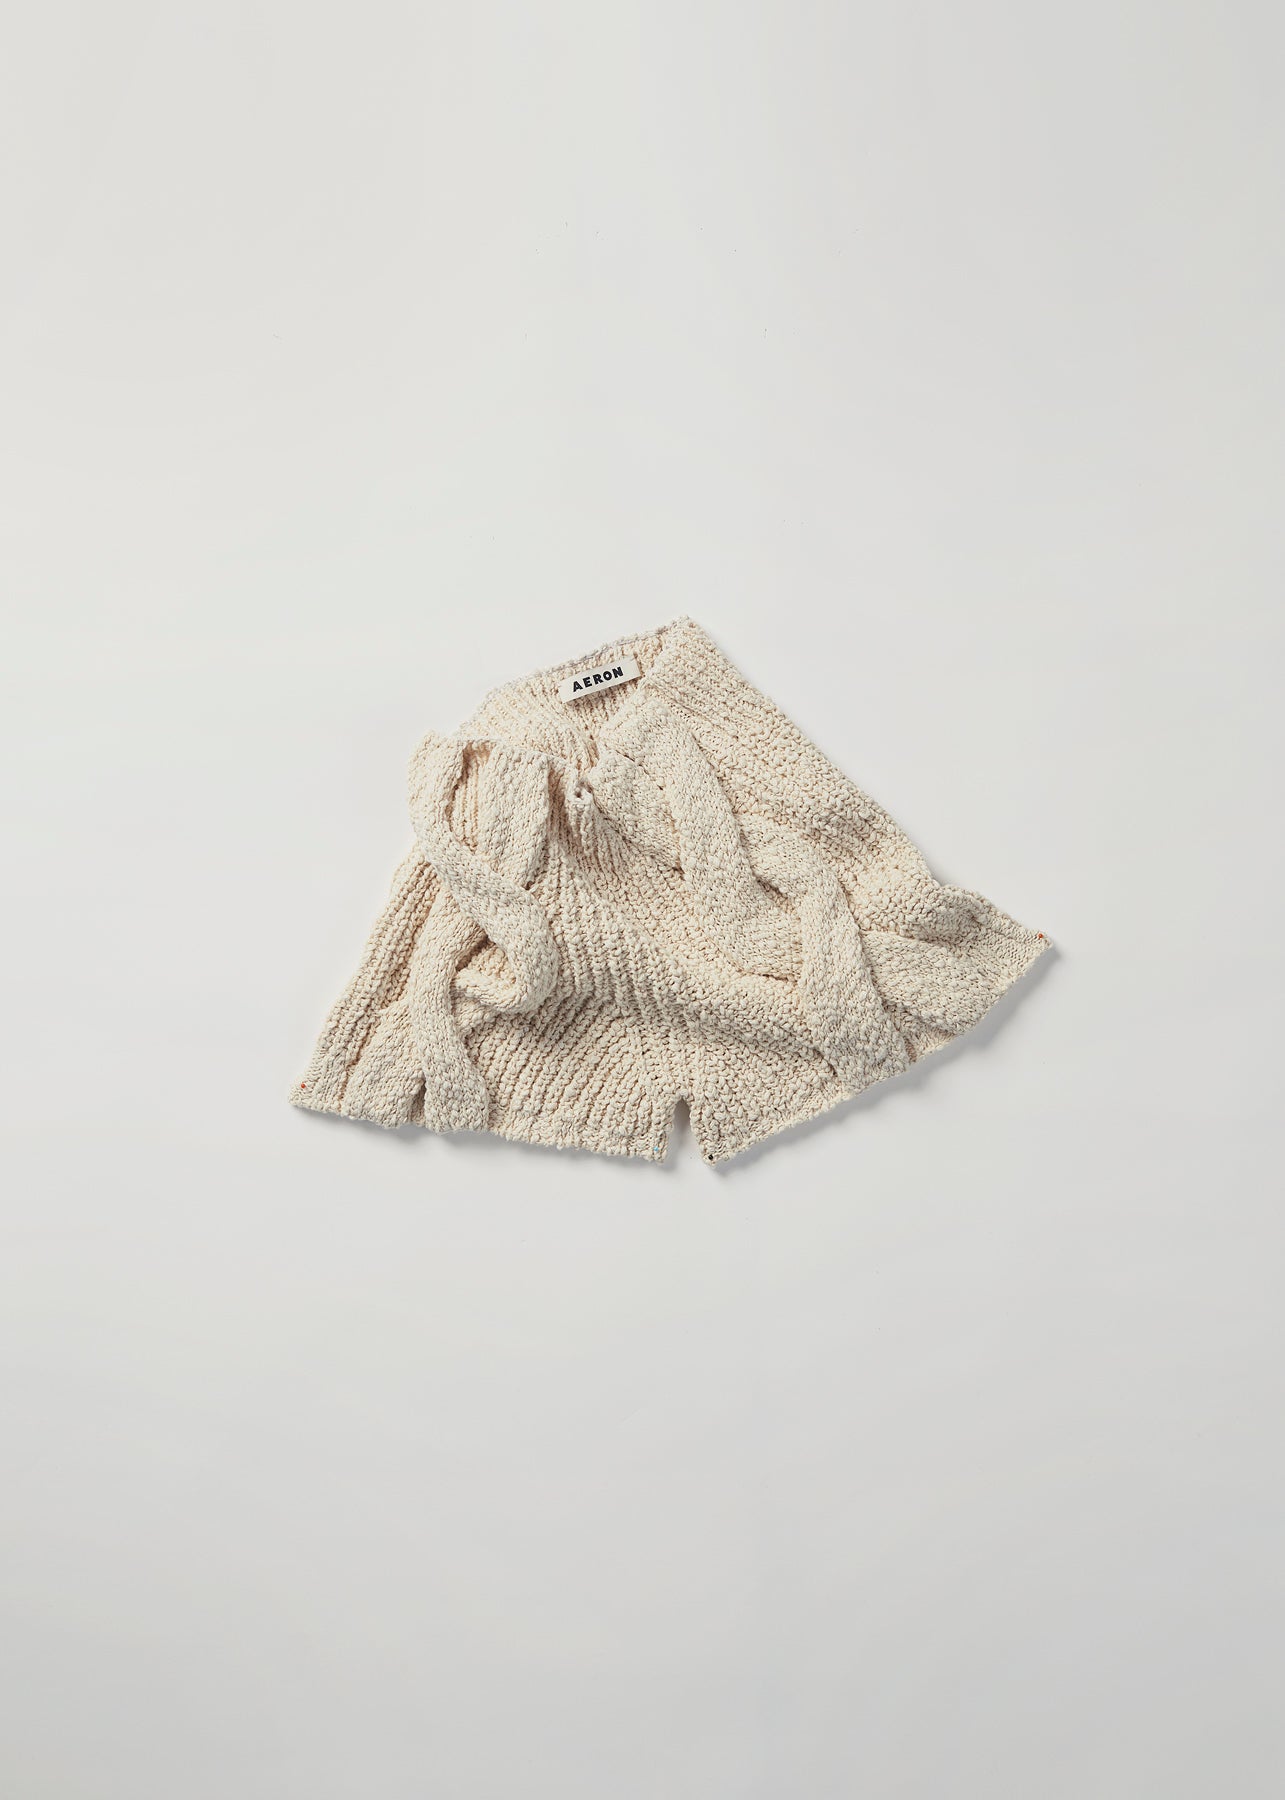 AERON RAIN Rustic knit shorts – cream